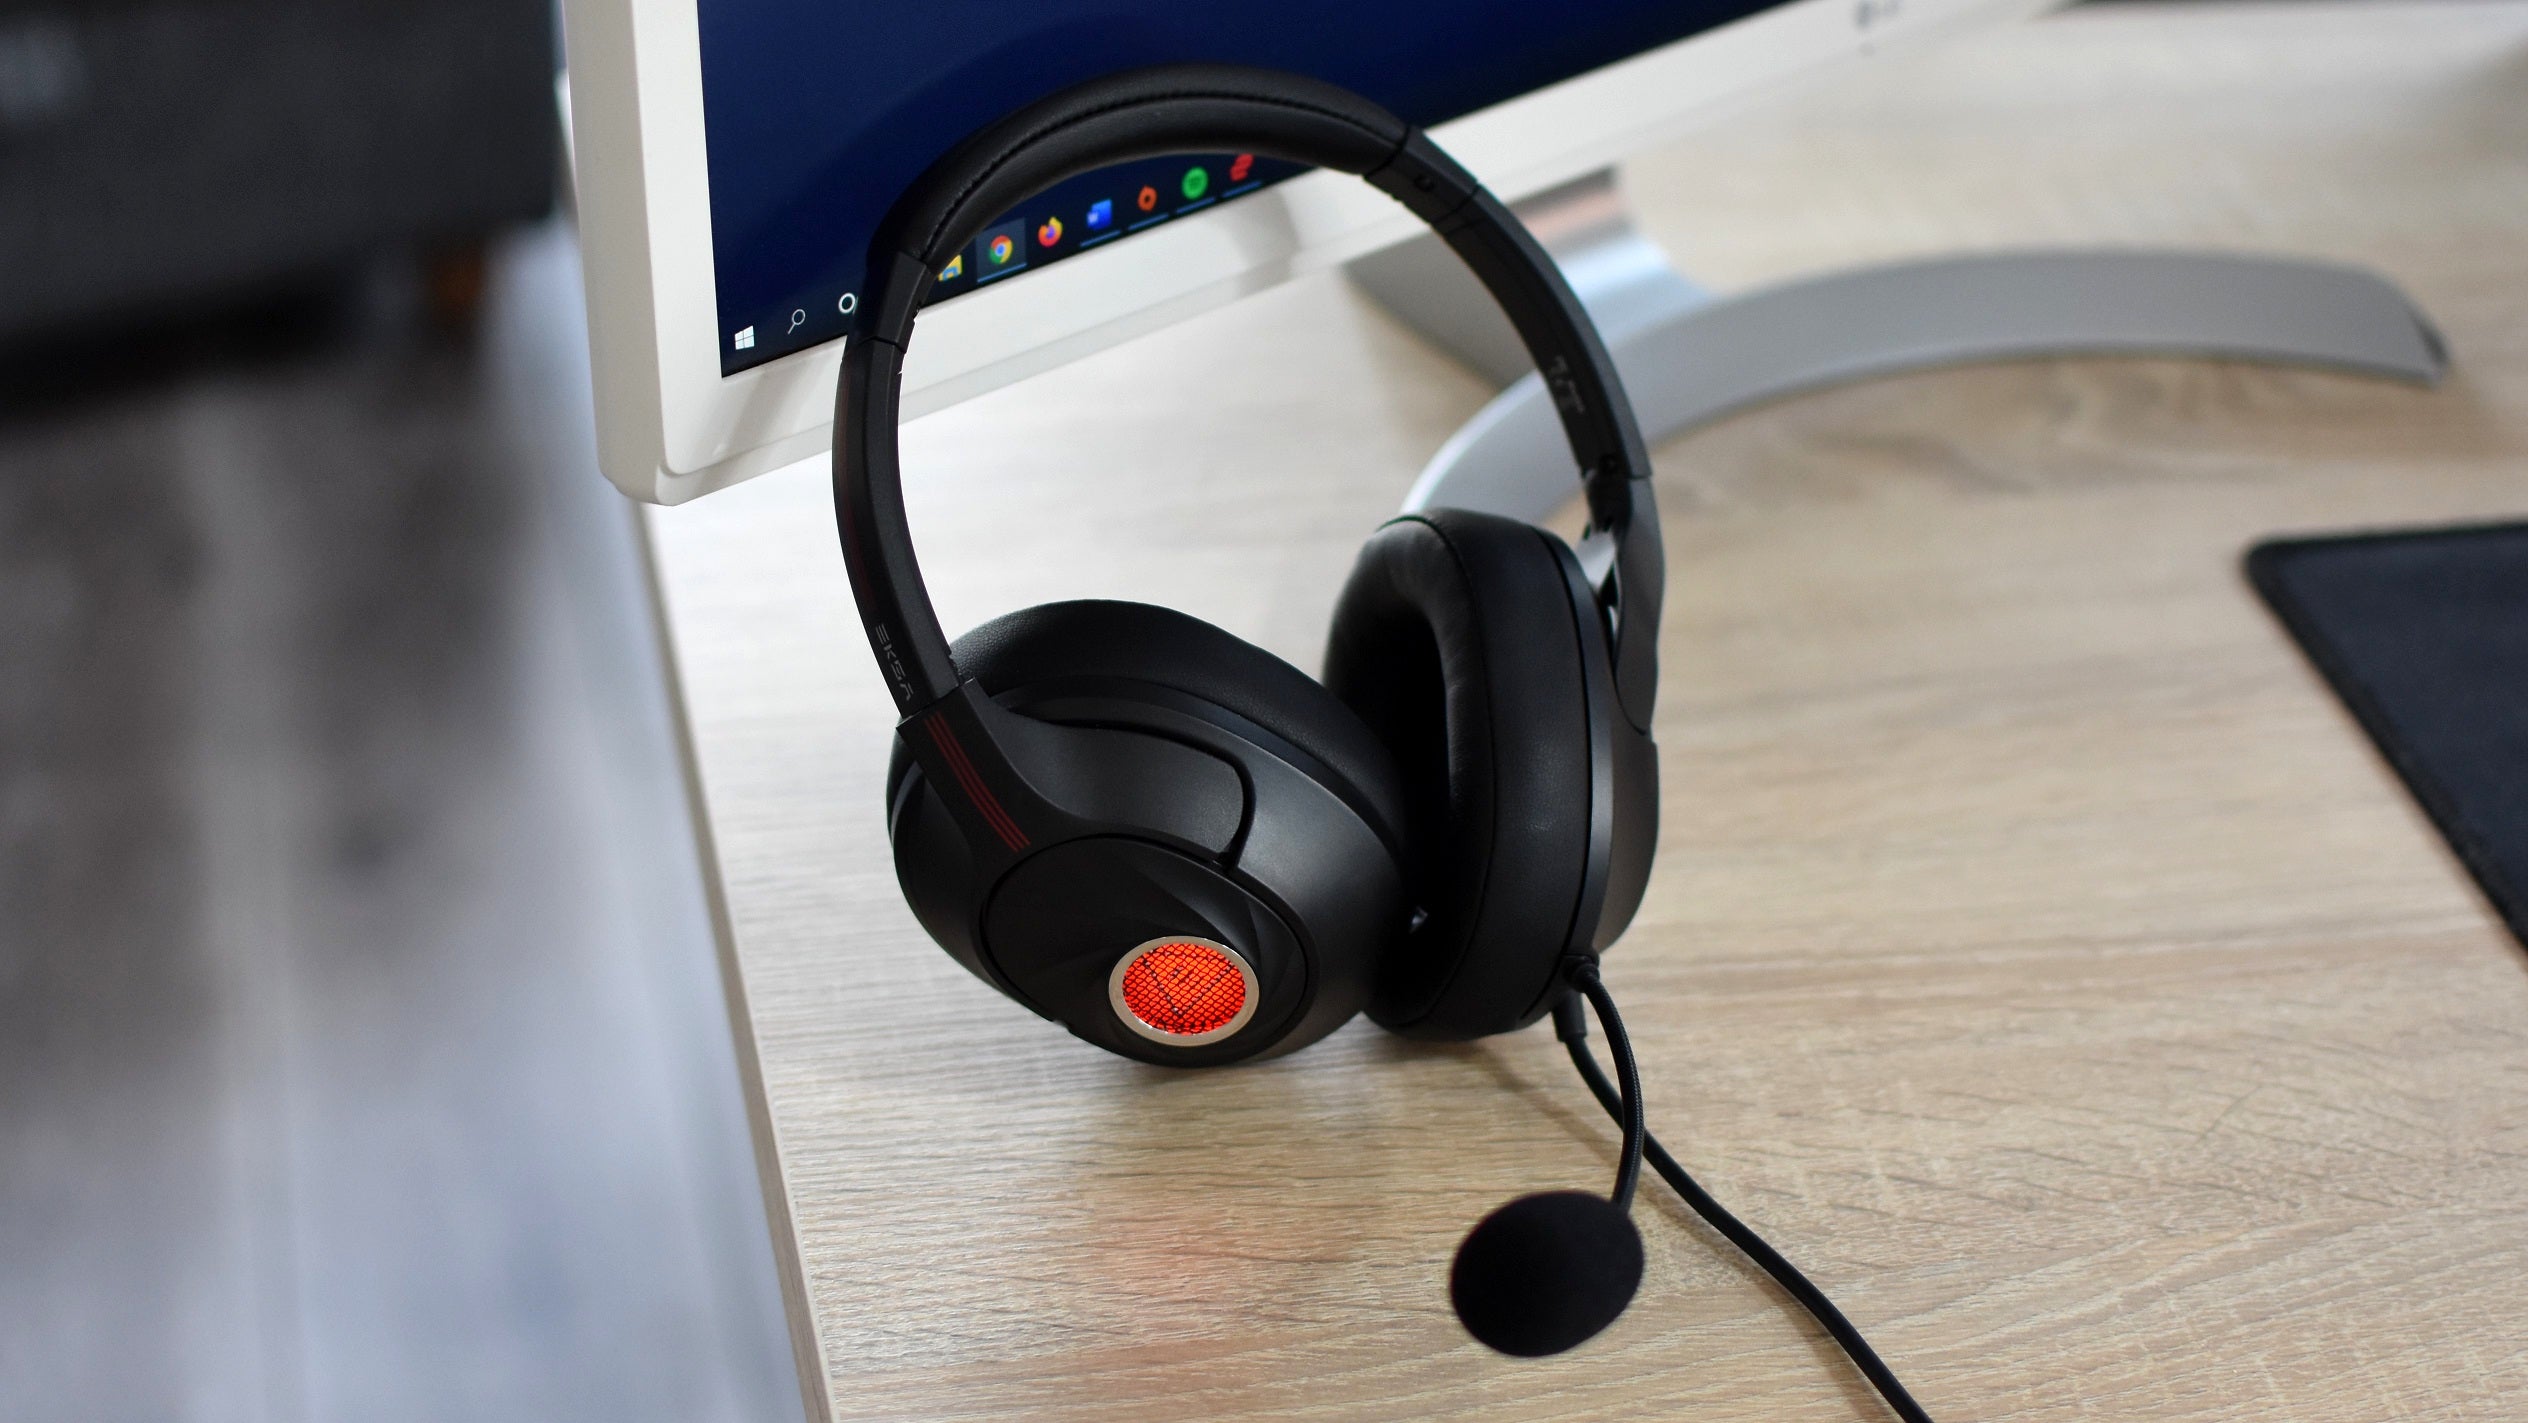 The EKSA Air Joy Plus gaming headset on a desk.